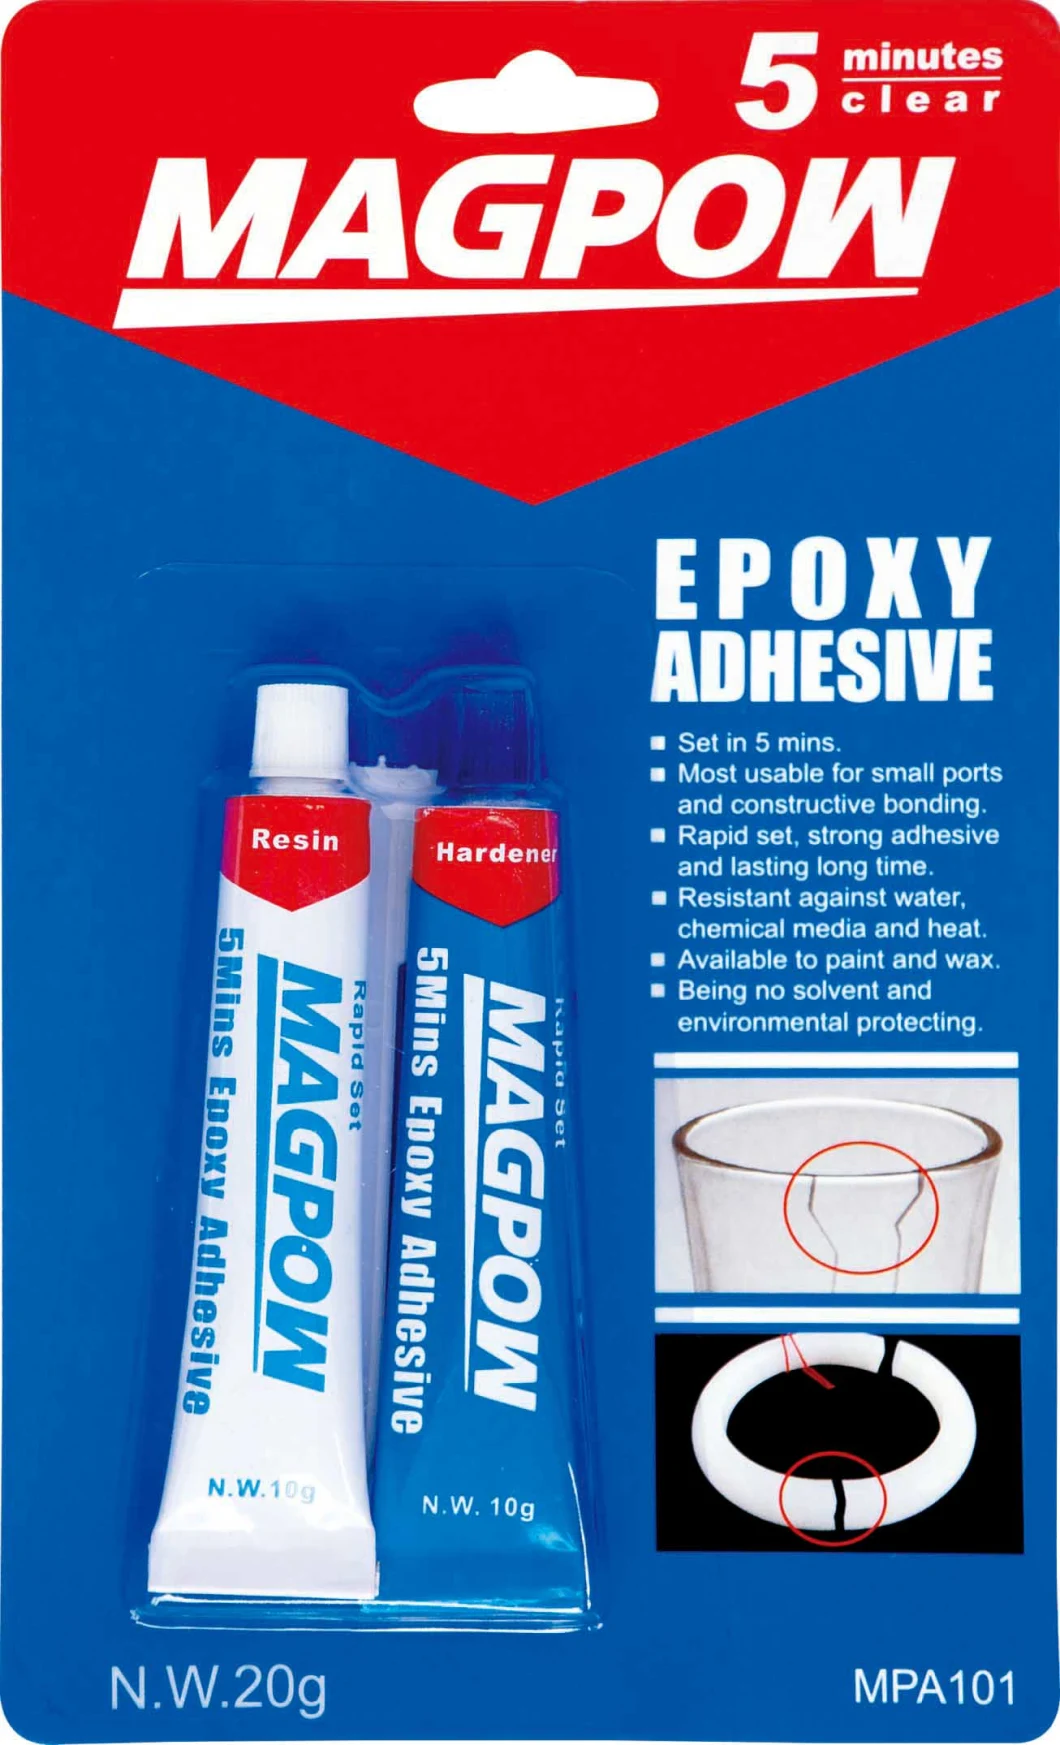 30g Rapid Black & White Epoxy Adhesive for Hardware